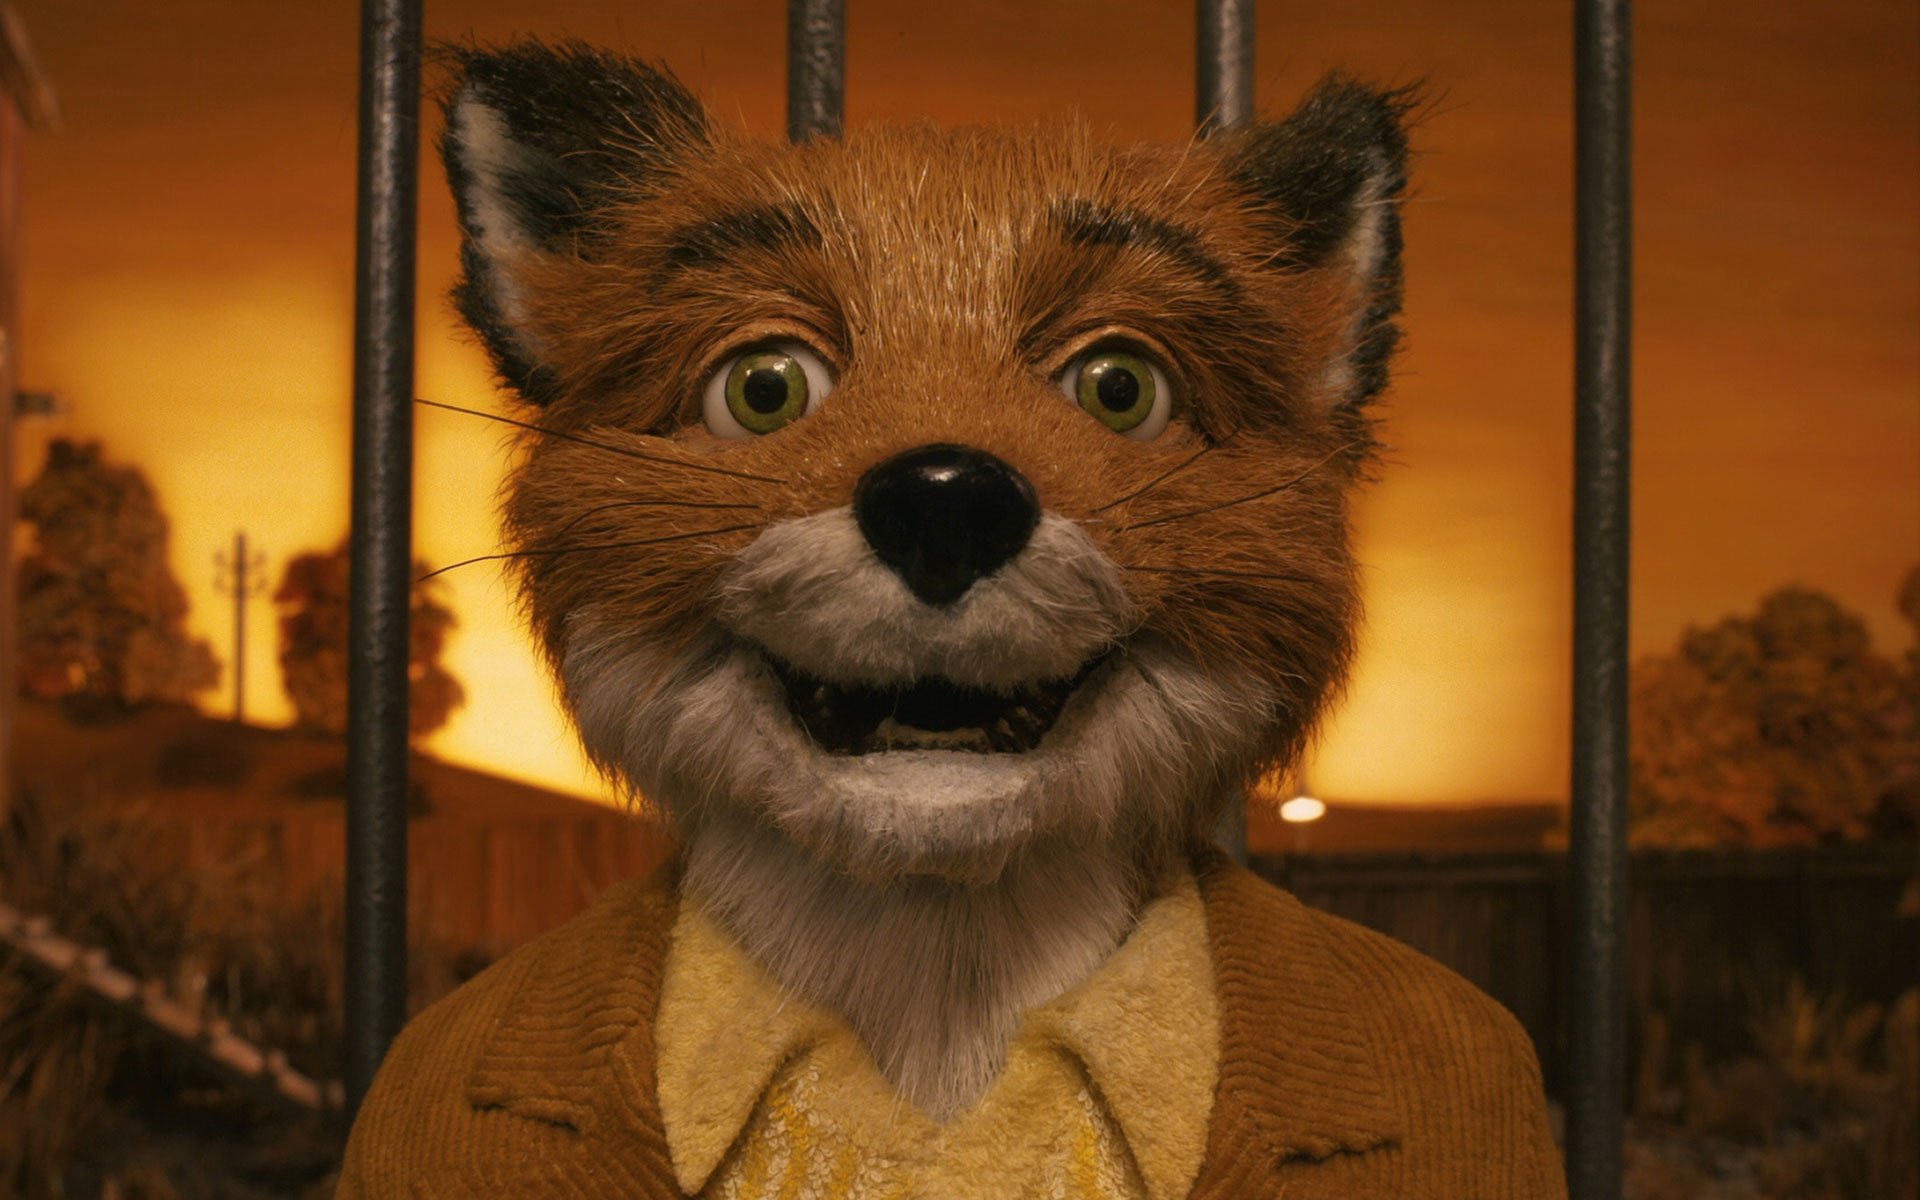 Mister fox. Бесподобный Мистер Фокс. Бесподобный Мистер Фокс (fantastic Mr. Fox), 2009. Уэс Андерсон бесподобный Мистер Фокс. Бесподобный Мистер ФОК.